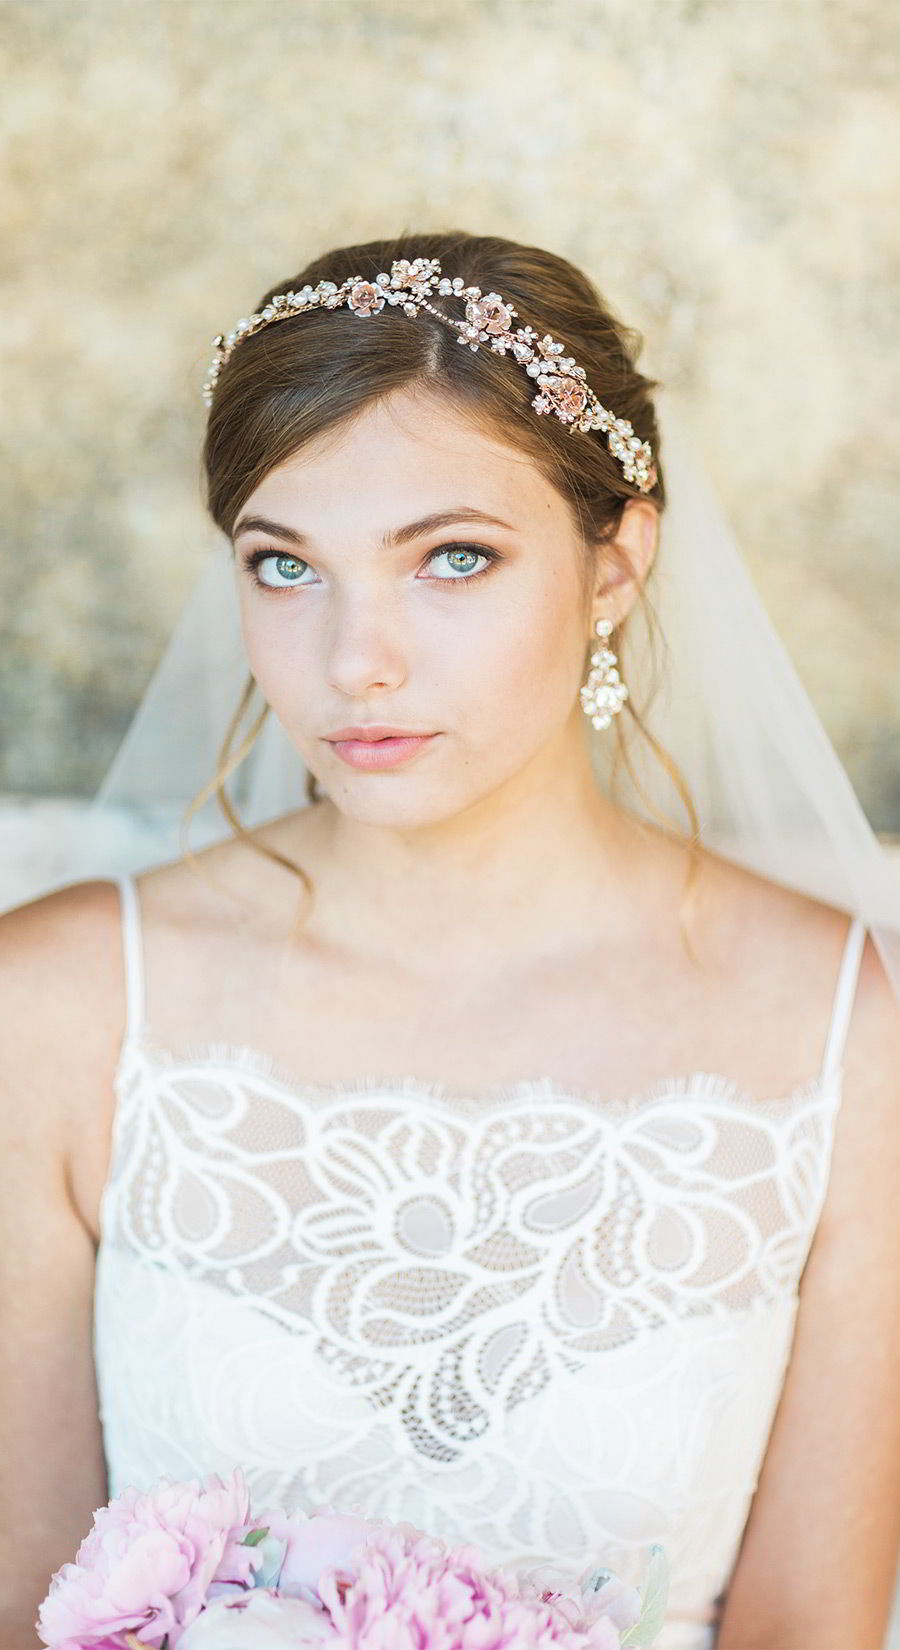 bel aire bridal accessories 6755 metallic rose gold headpiece wedding hair accessory